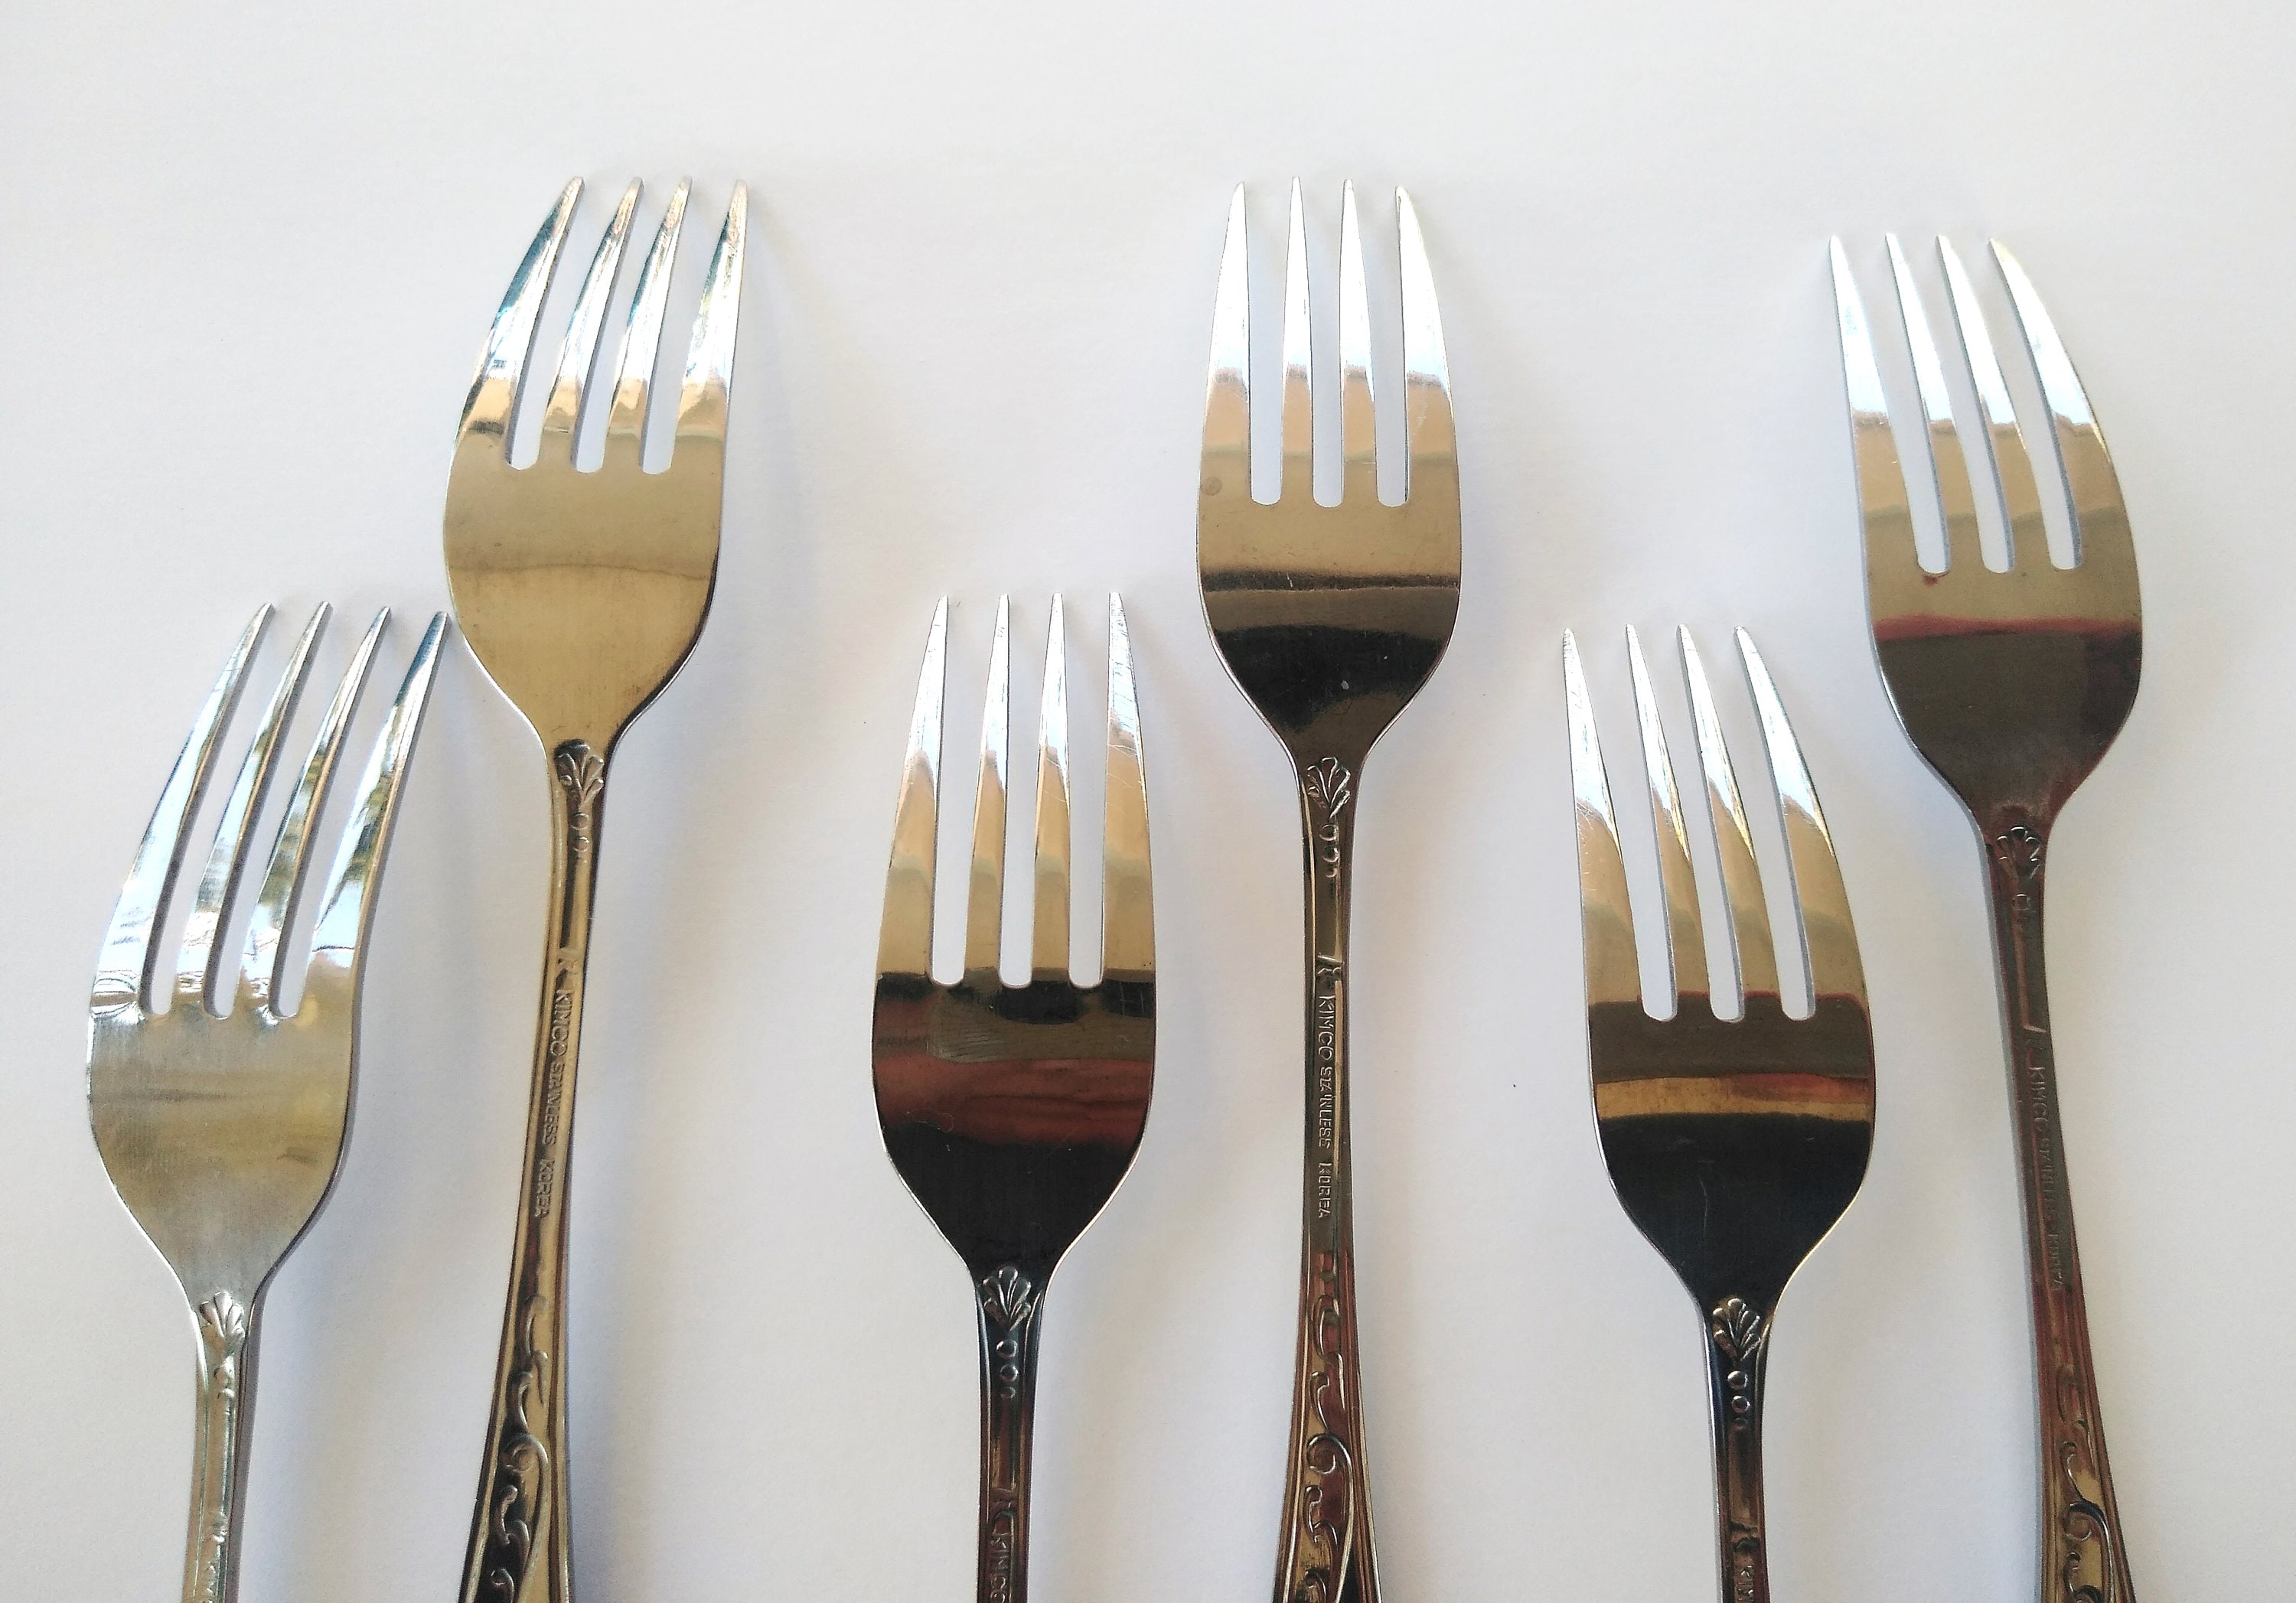 set of 6 dinner fork stainless steel Kimco KIO10 vintage kitchen dining serving